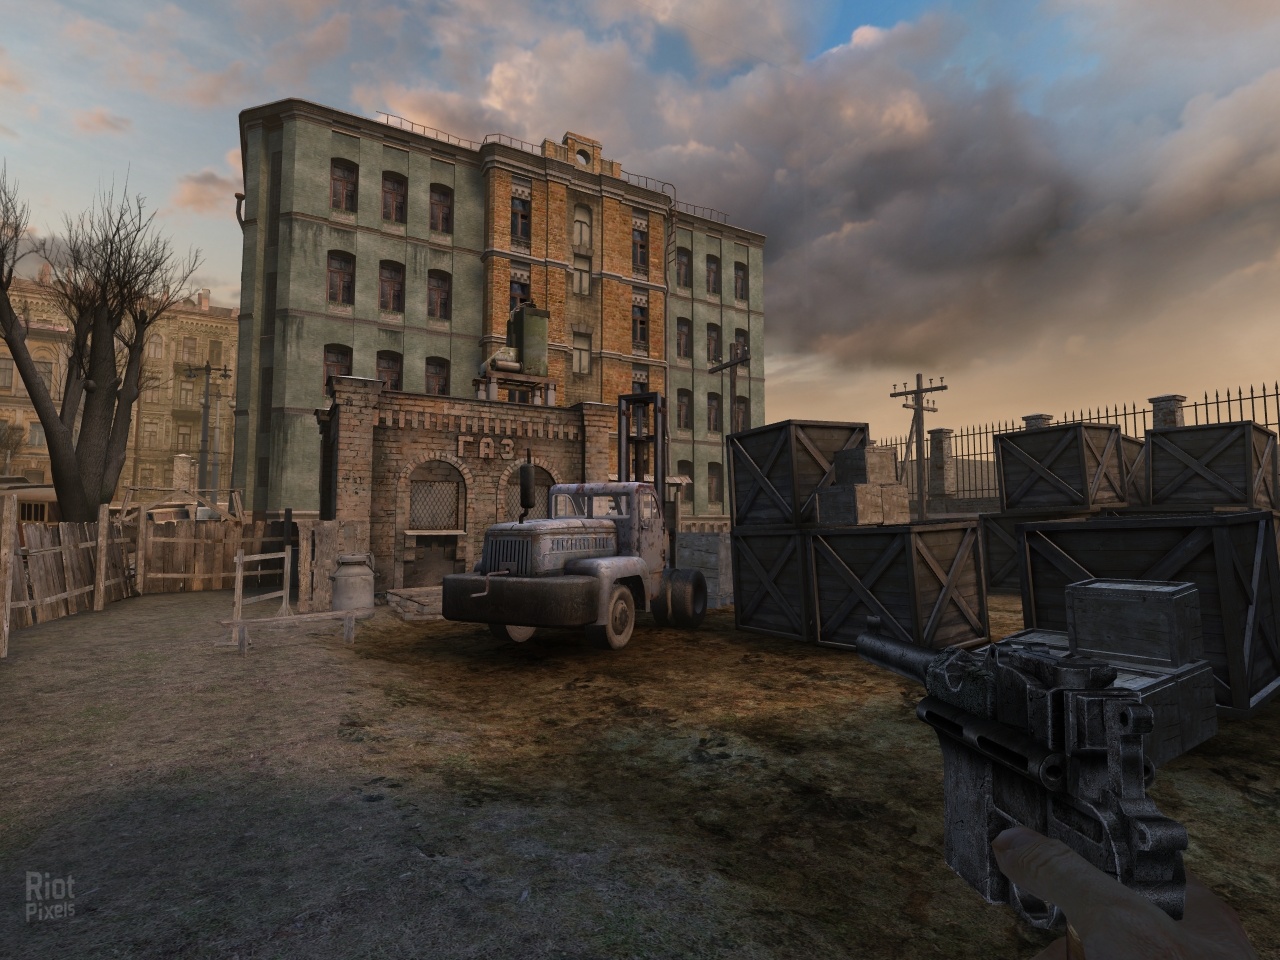 Forgotten Memories: Alternate Realities - game screenshots at Riot Pixels,  images